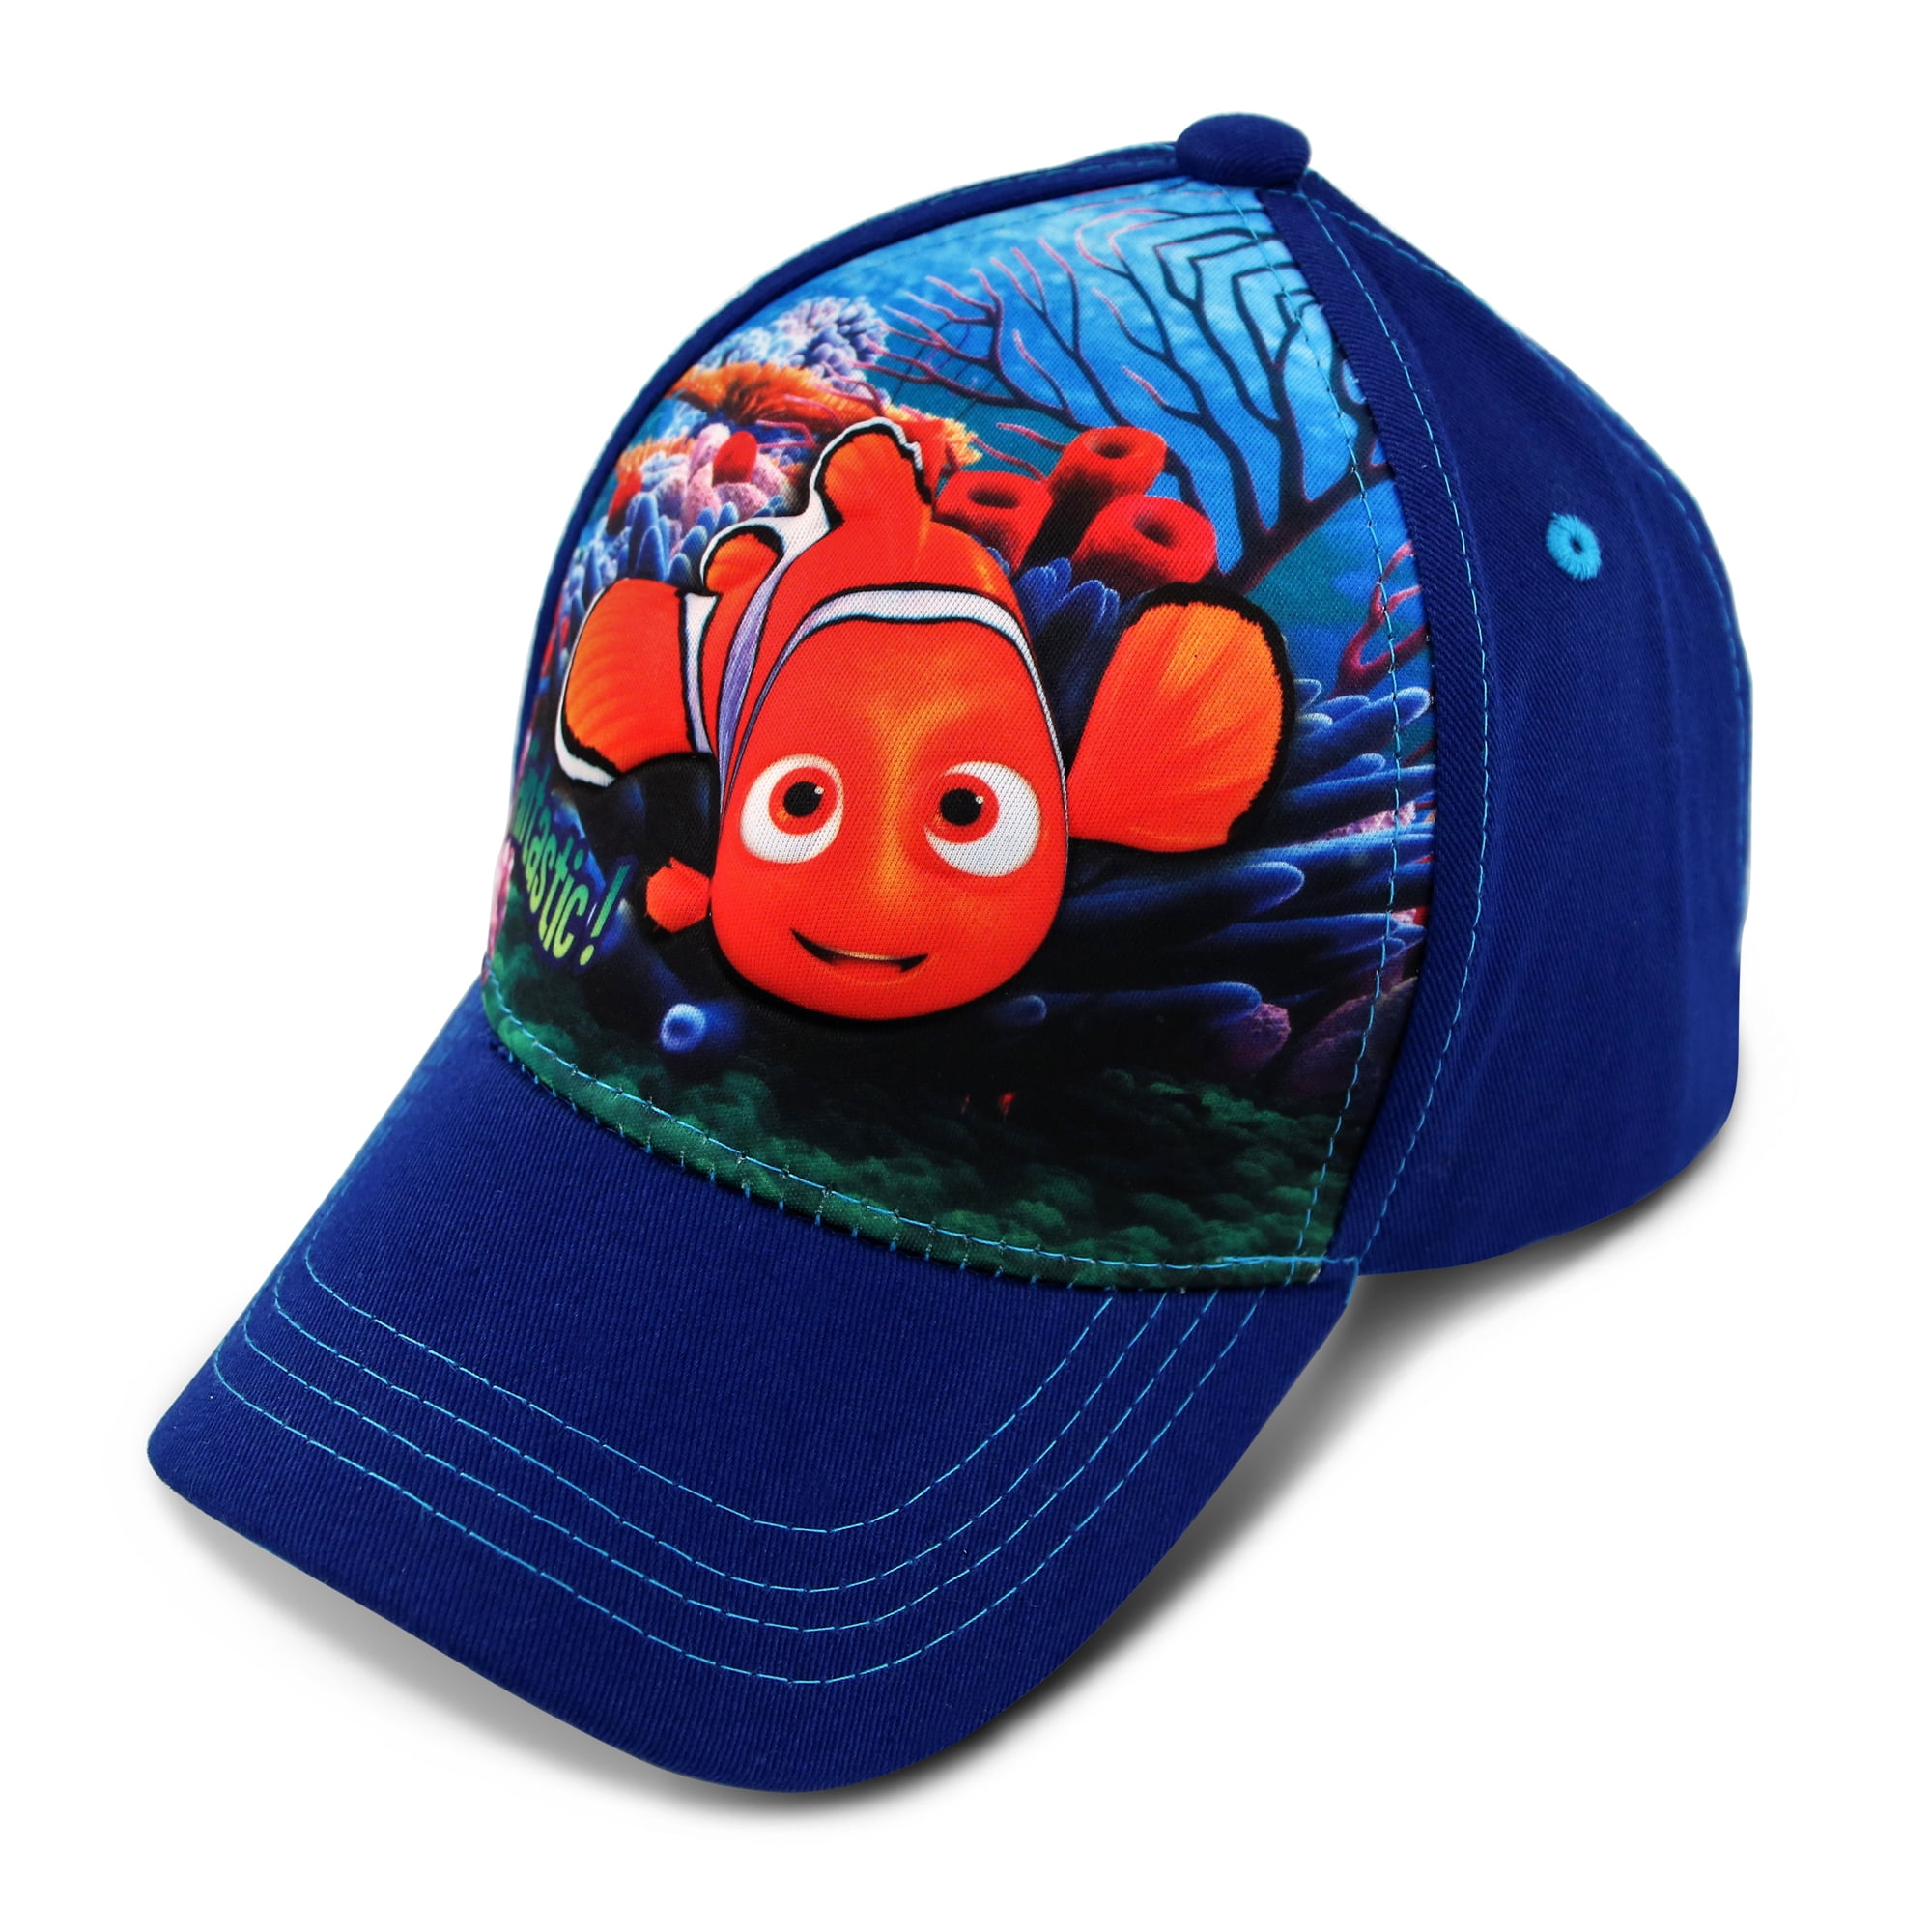 Little Boys Finding Nemo 3D Pop Cap, Blue, Age 4-7 - Walmart.com